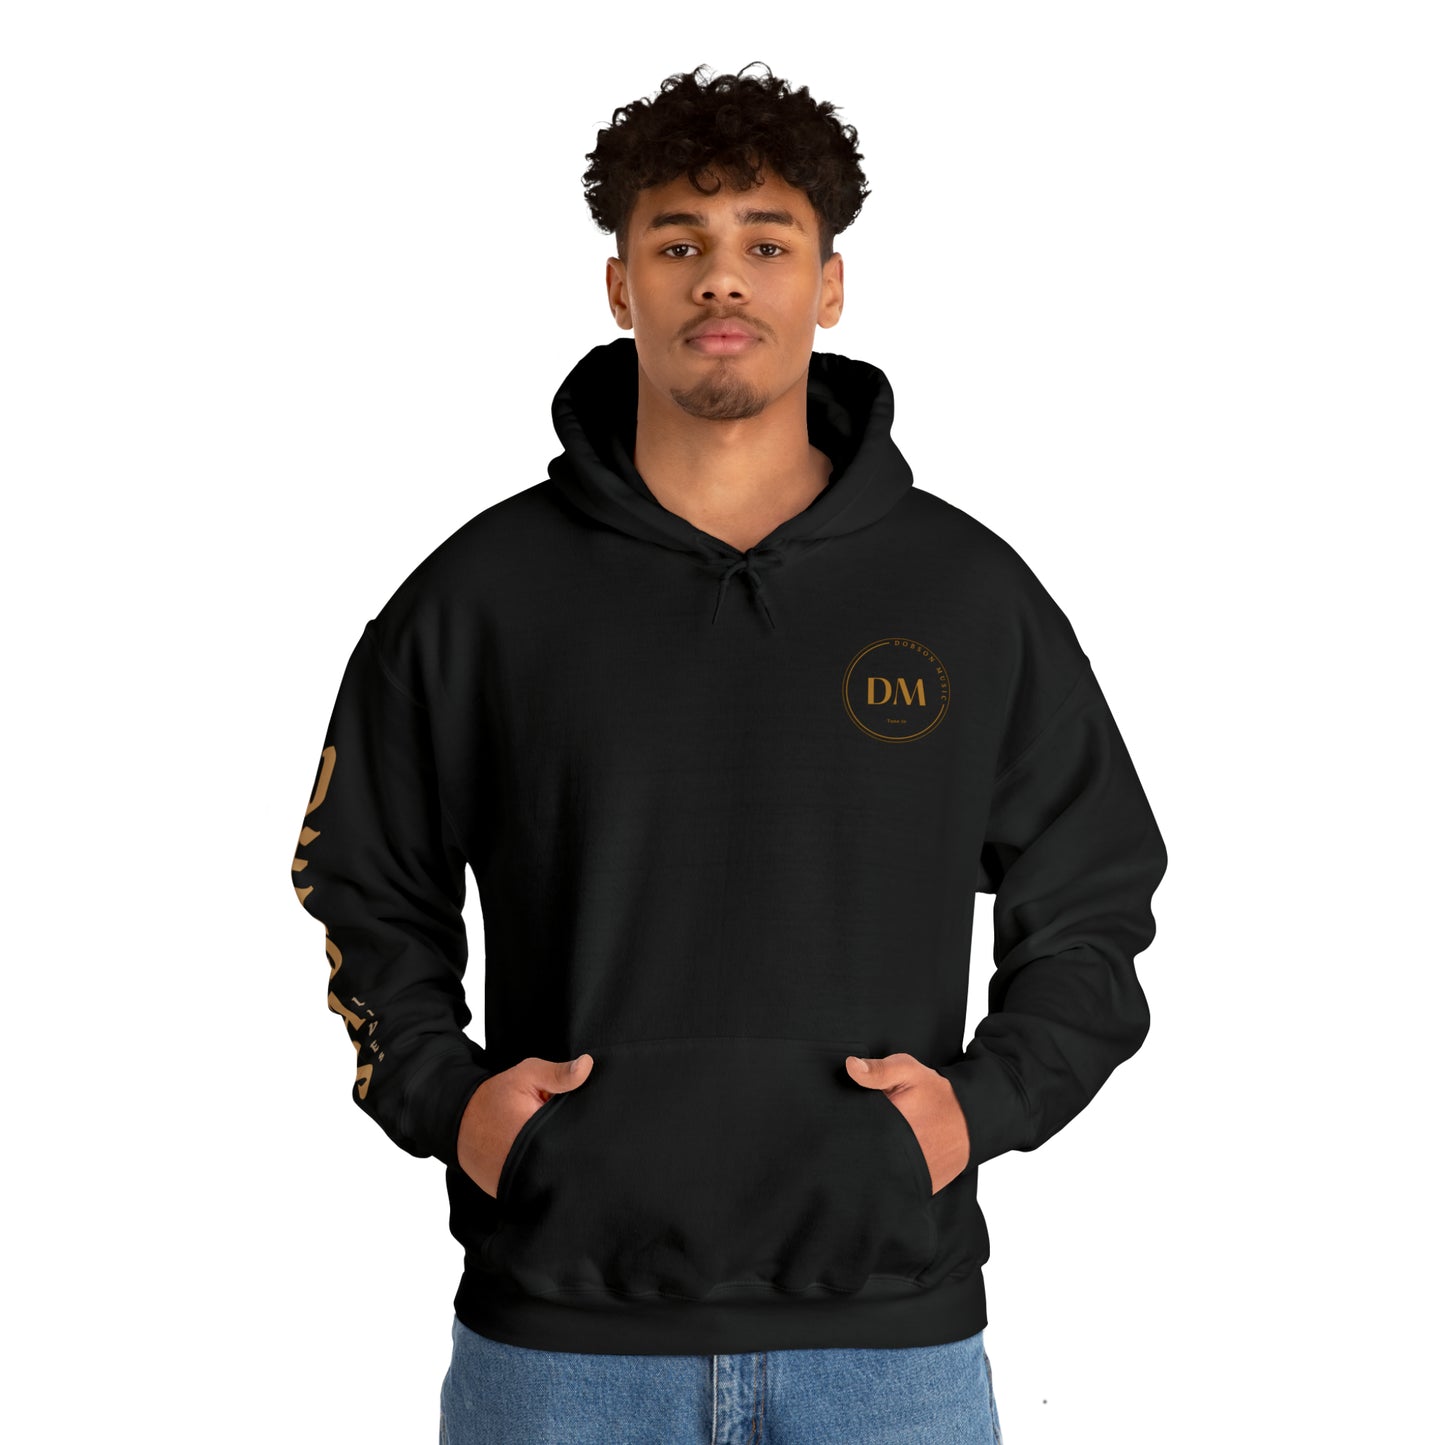 DM - Jesus Lives D2 Unisex Hooded Sweatshirt